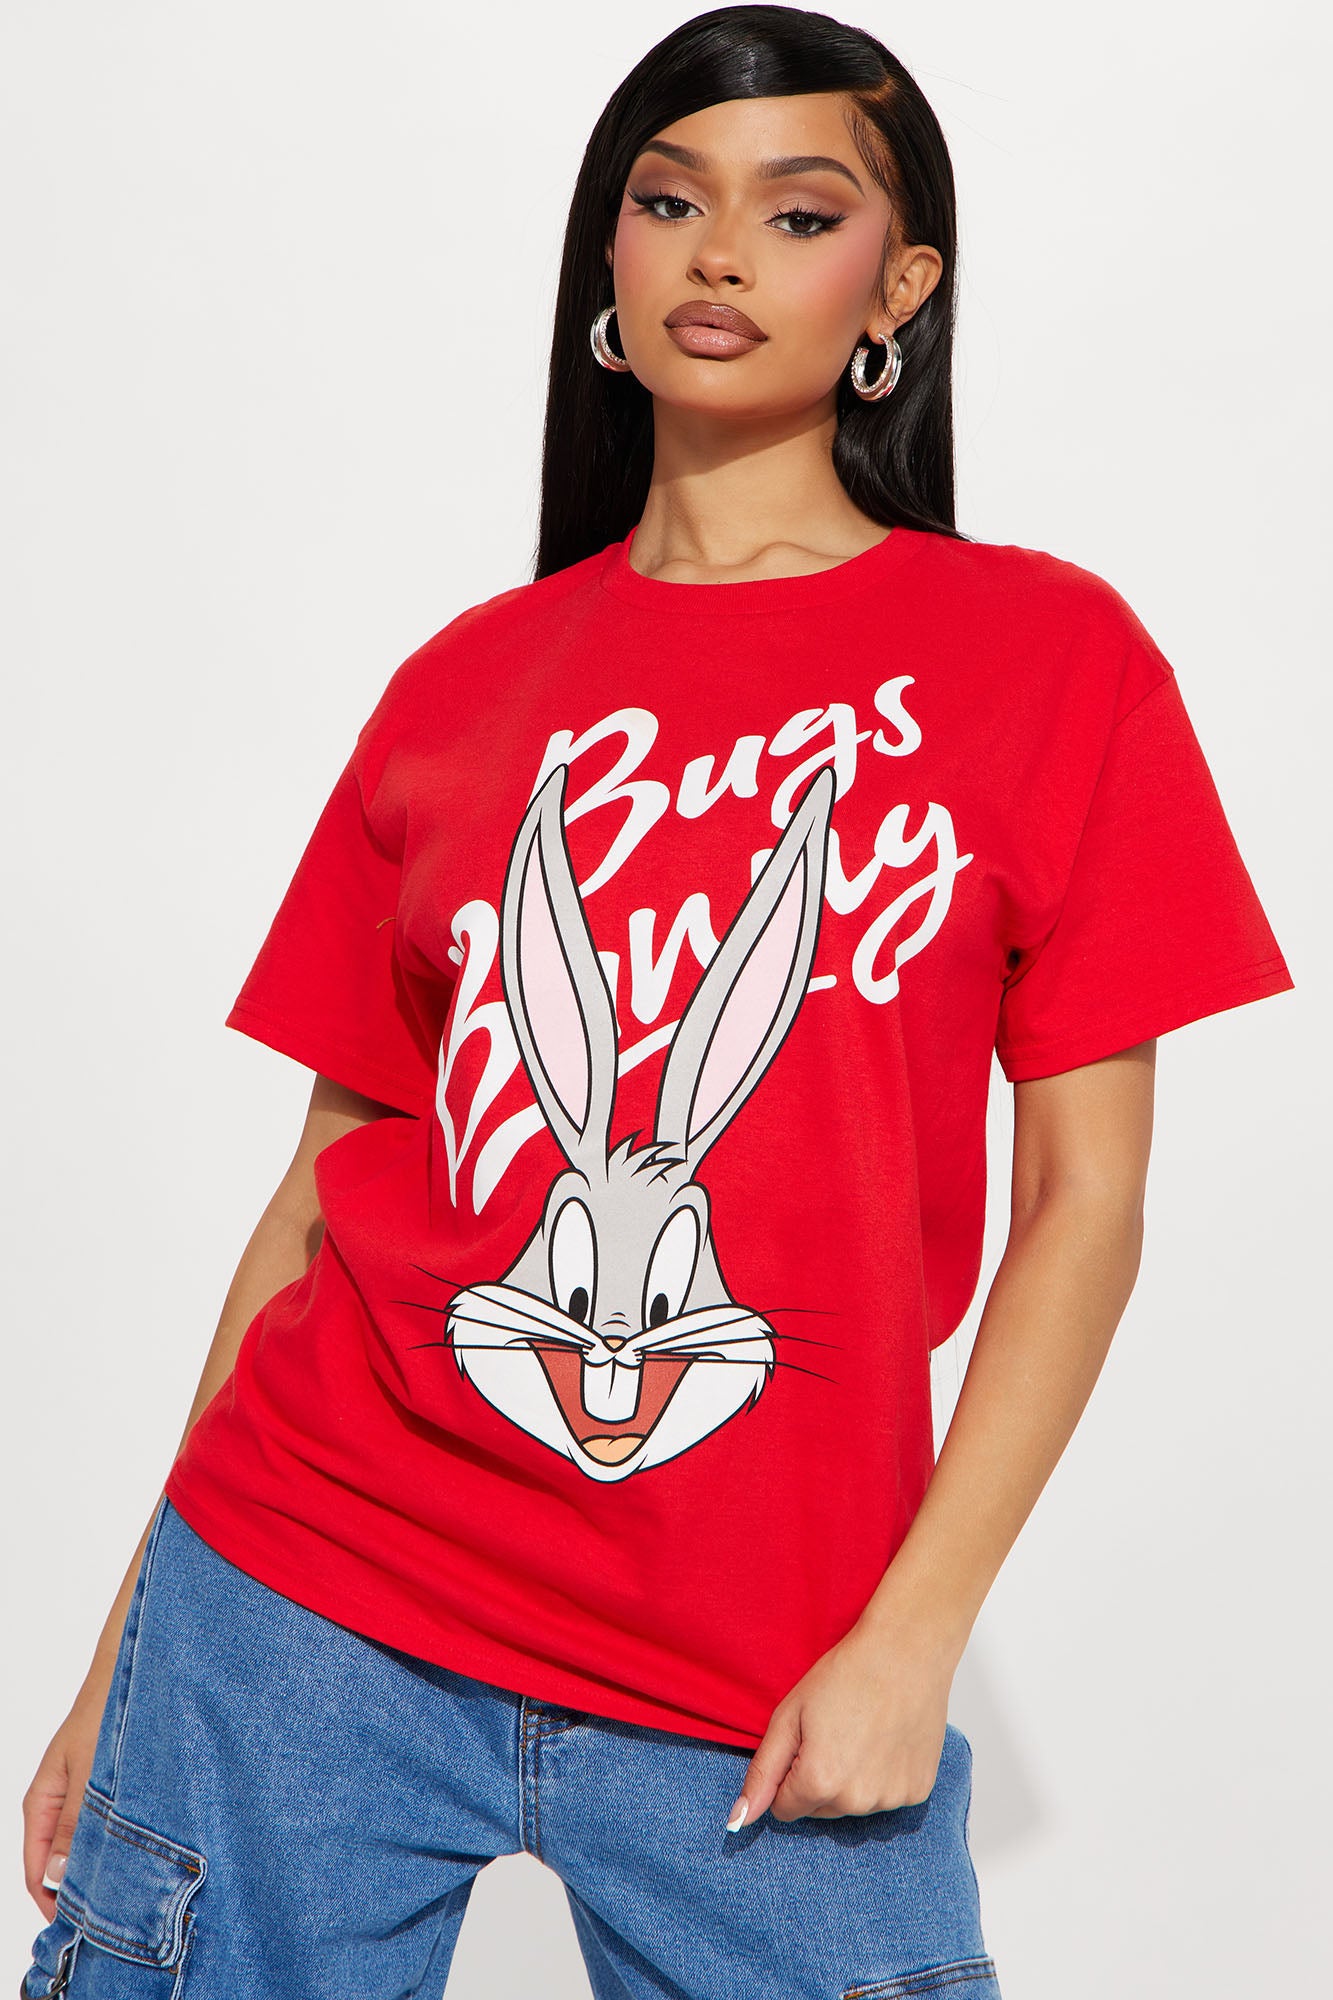 Bugs Bunny Graphic T-Shirt Nova - Red Nova, Screens | Tops Bottoms | Fashion Fashion and